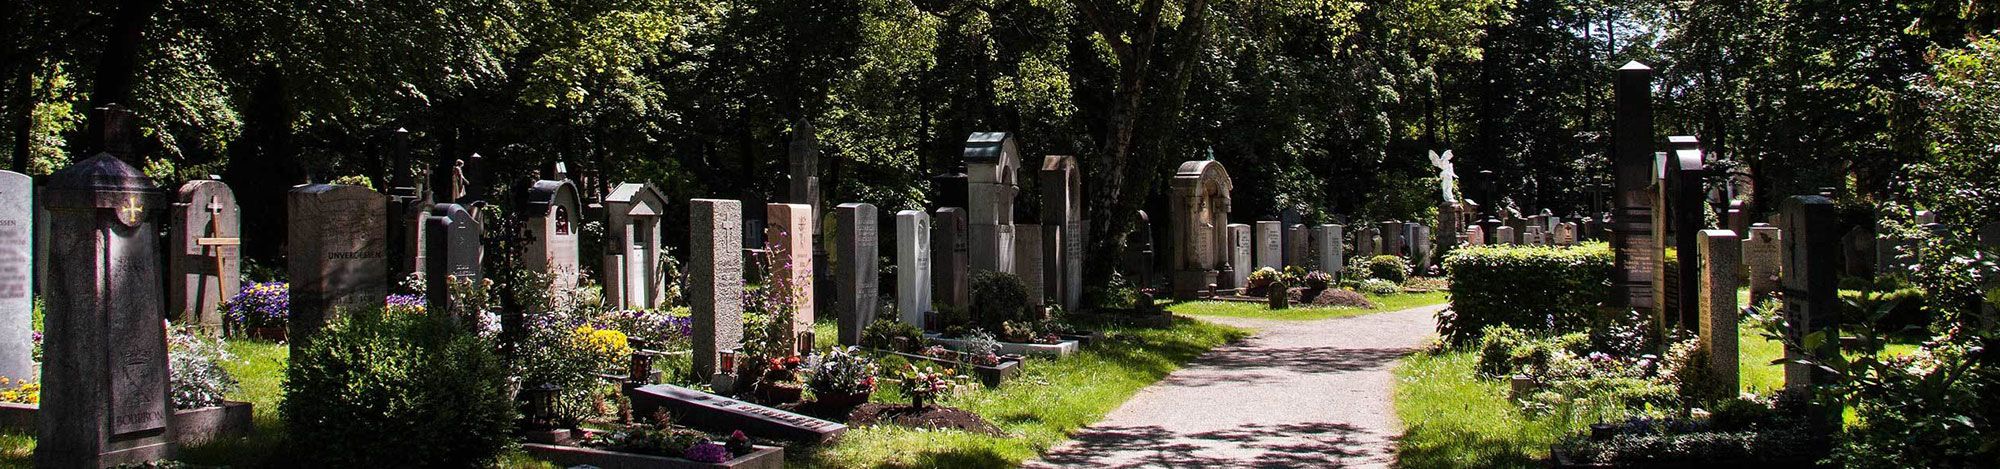 Friedhof Grabsteine